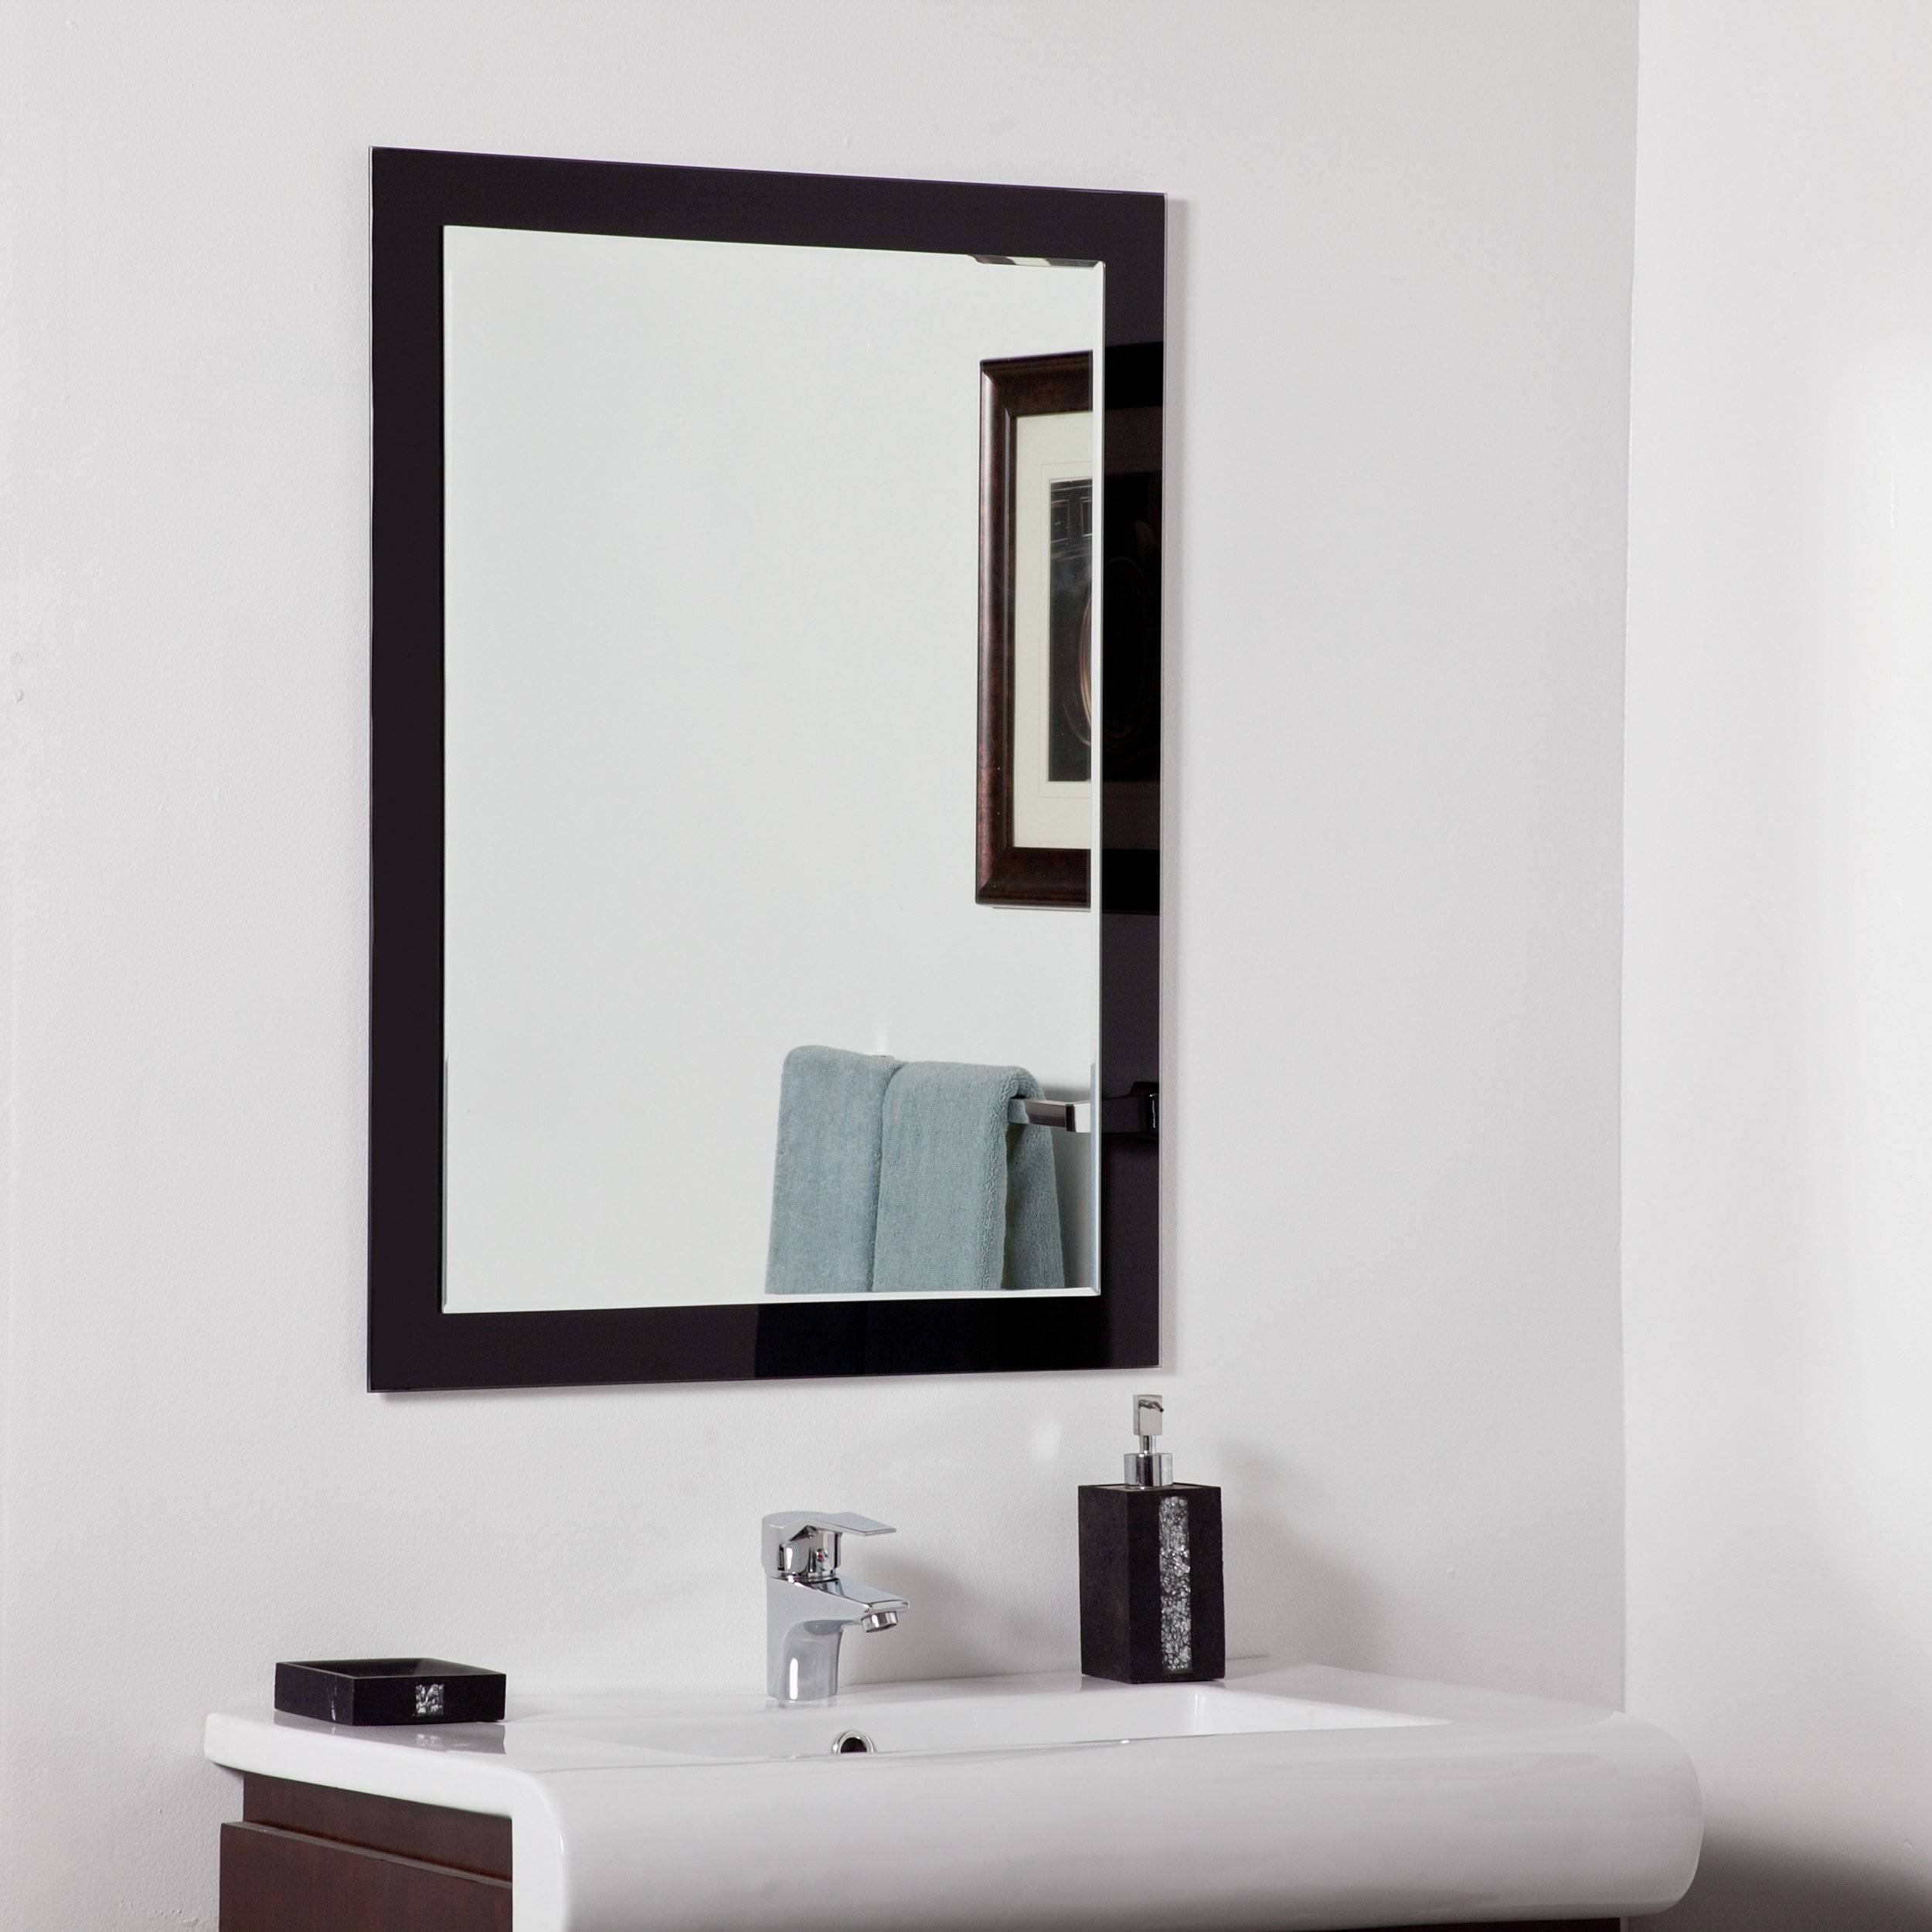 With mirror view. Зеркало в ванную. Зеркало в черной раме в ванную. Зеркало в ванную чернок. Зеркало в черной рамке в ванную.